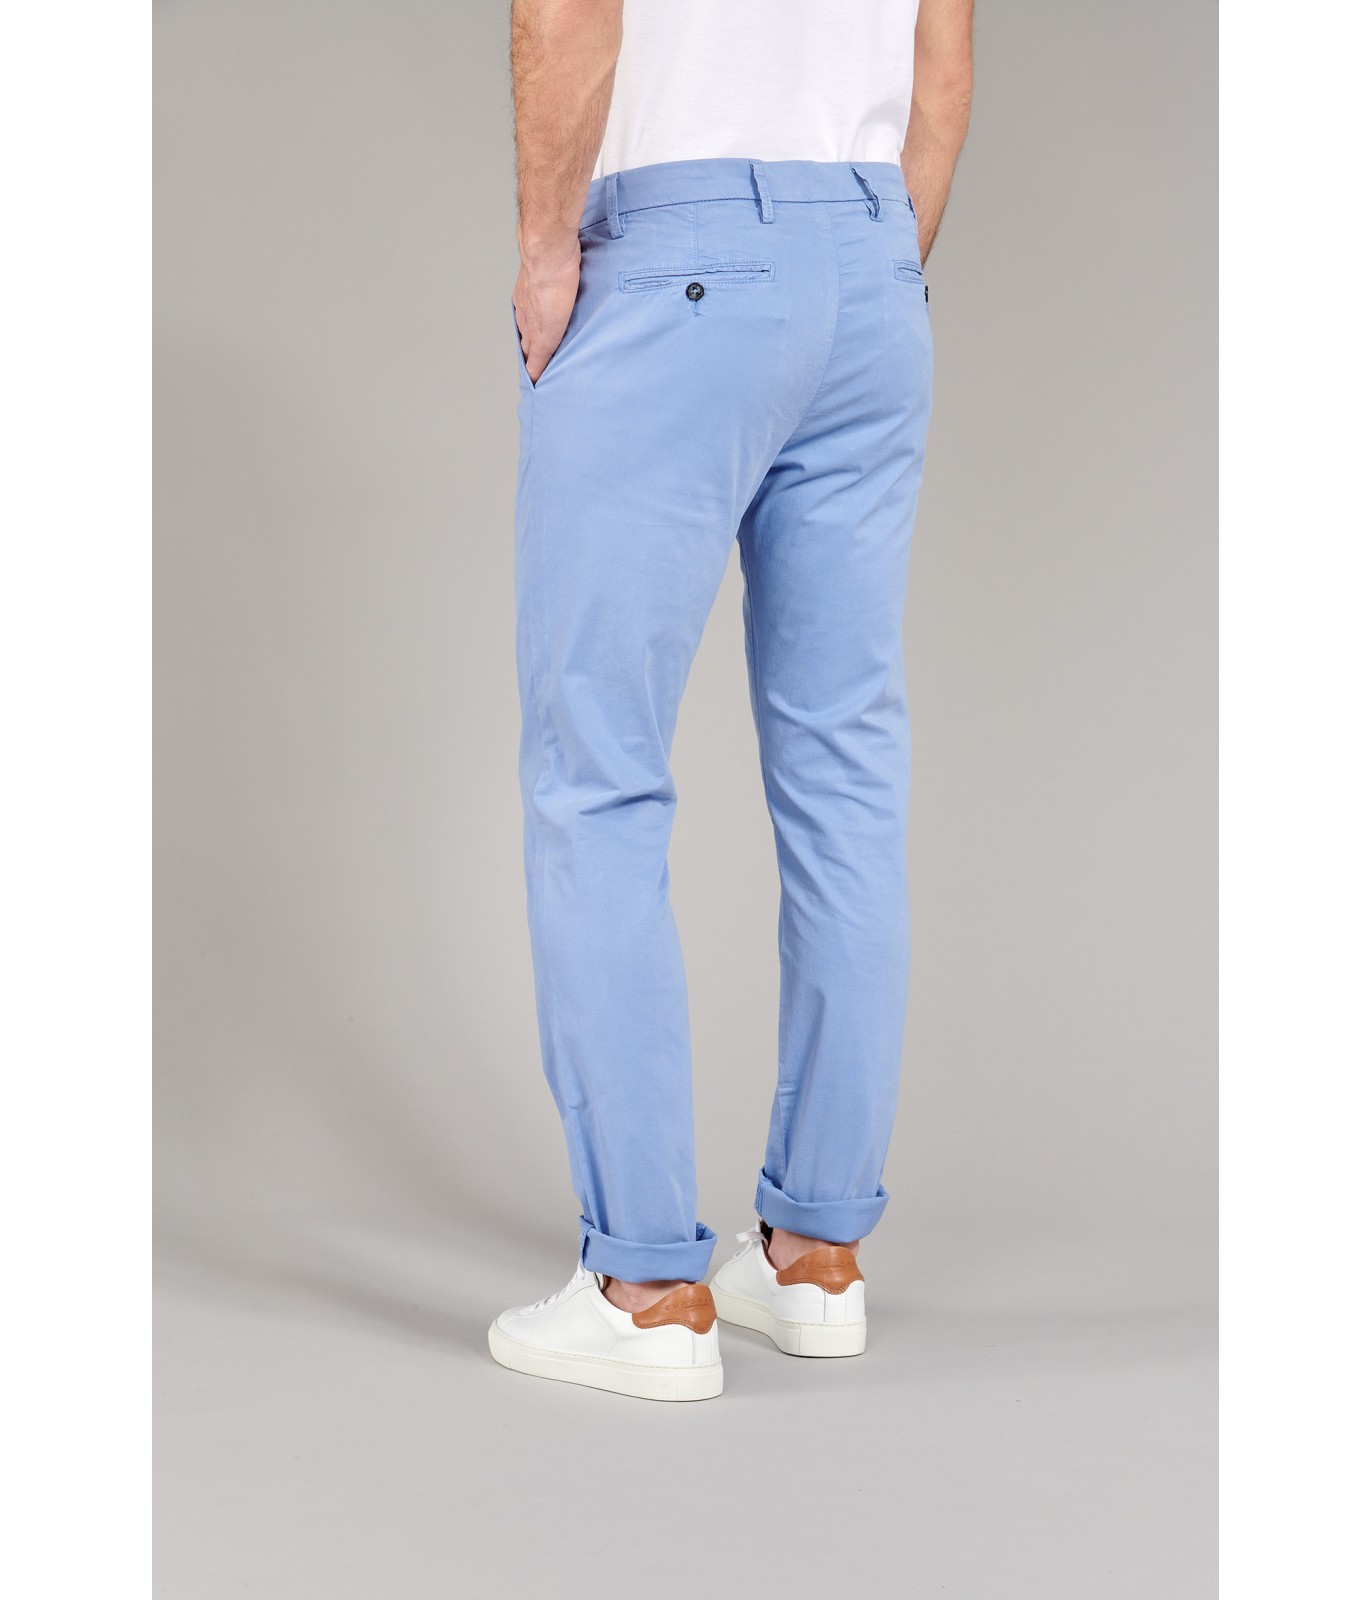 Pantalon homme coupe chino SLACK bleu - Molinel - Taille 52